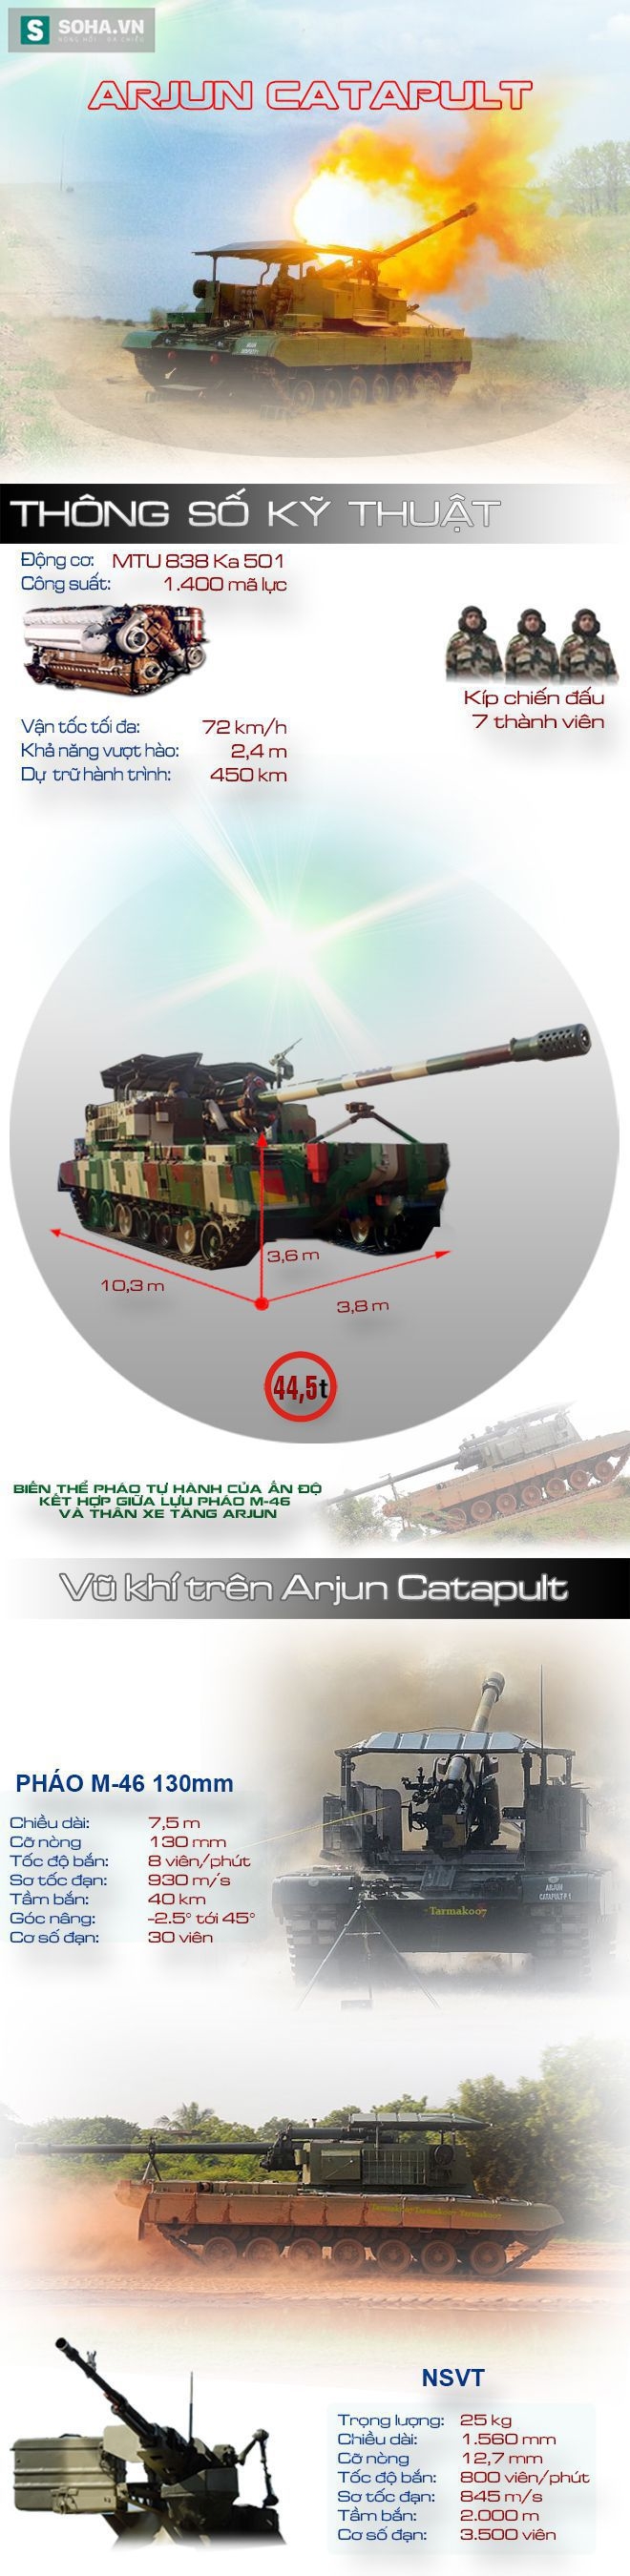 arjun-catapult-1479115621404